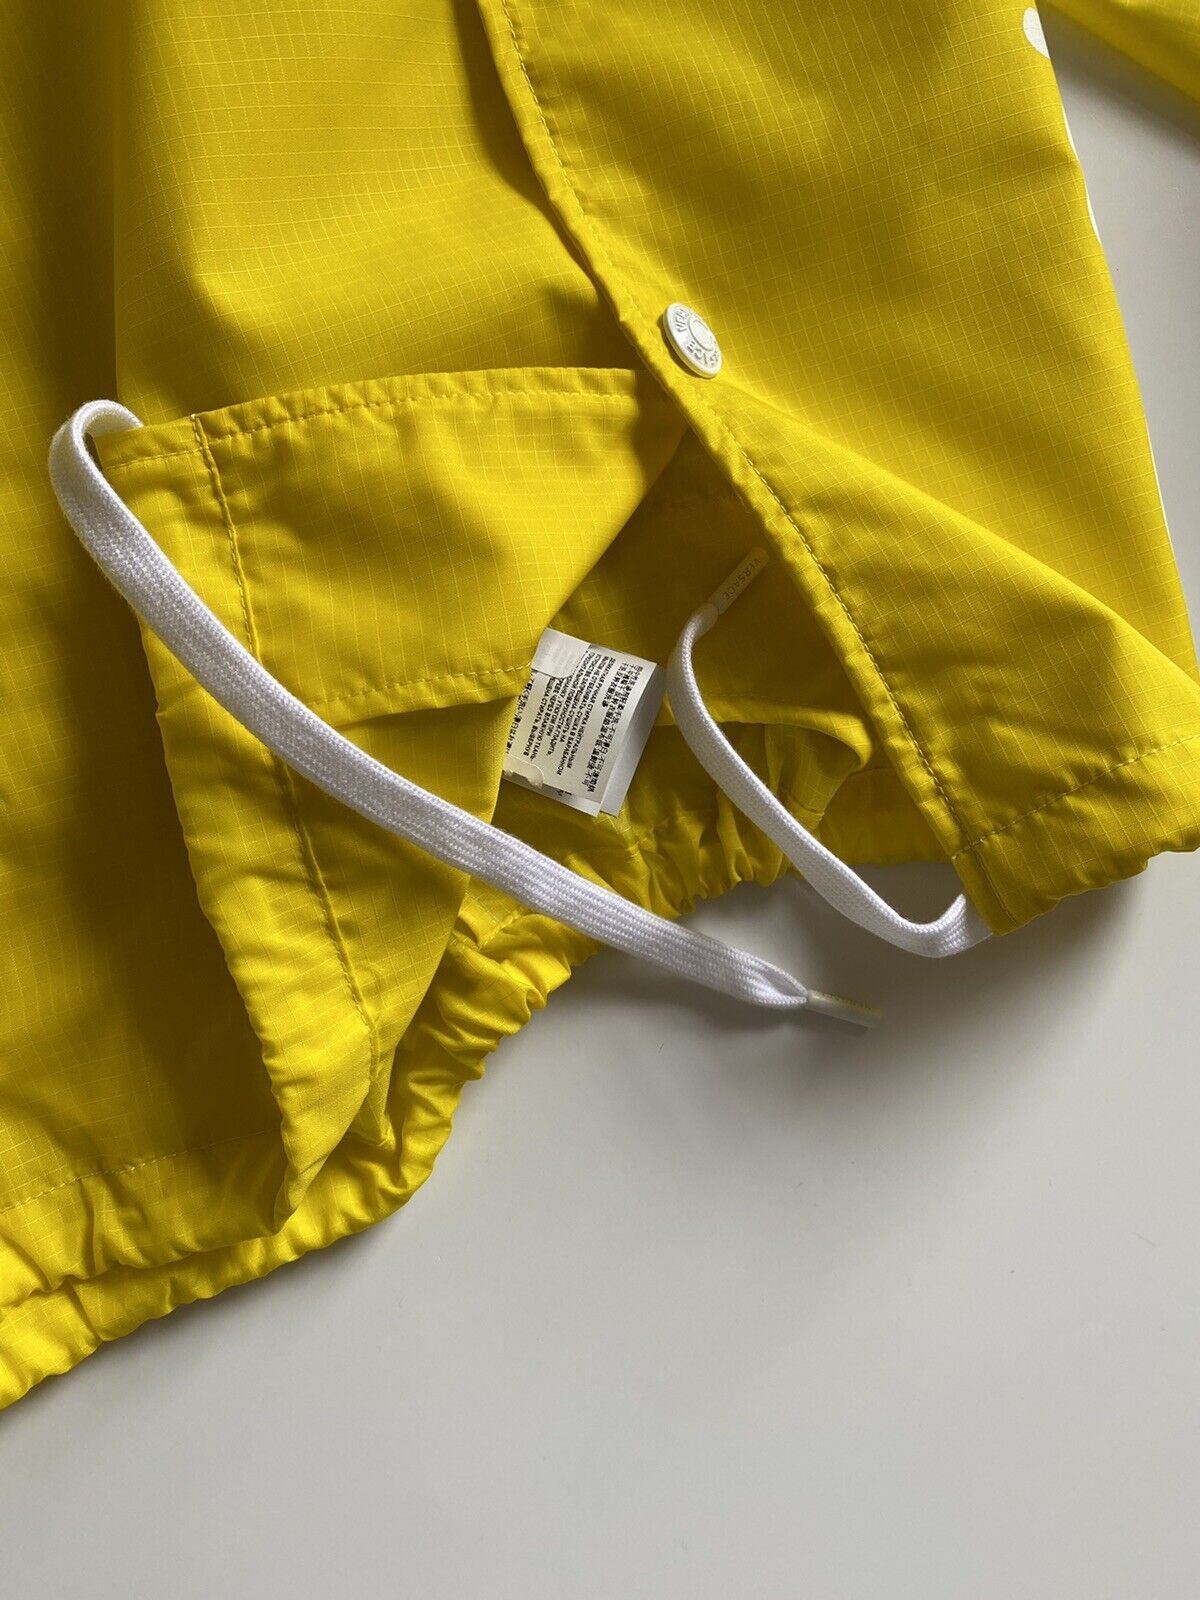 NWT $1150 Versace Men's Button Down Yellow Raincoat Jacket L (50 Euro) A85203 IT